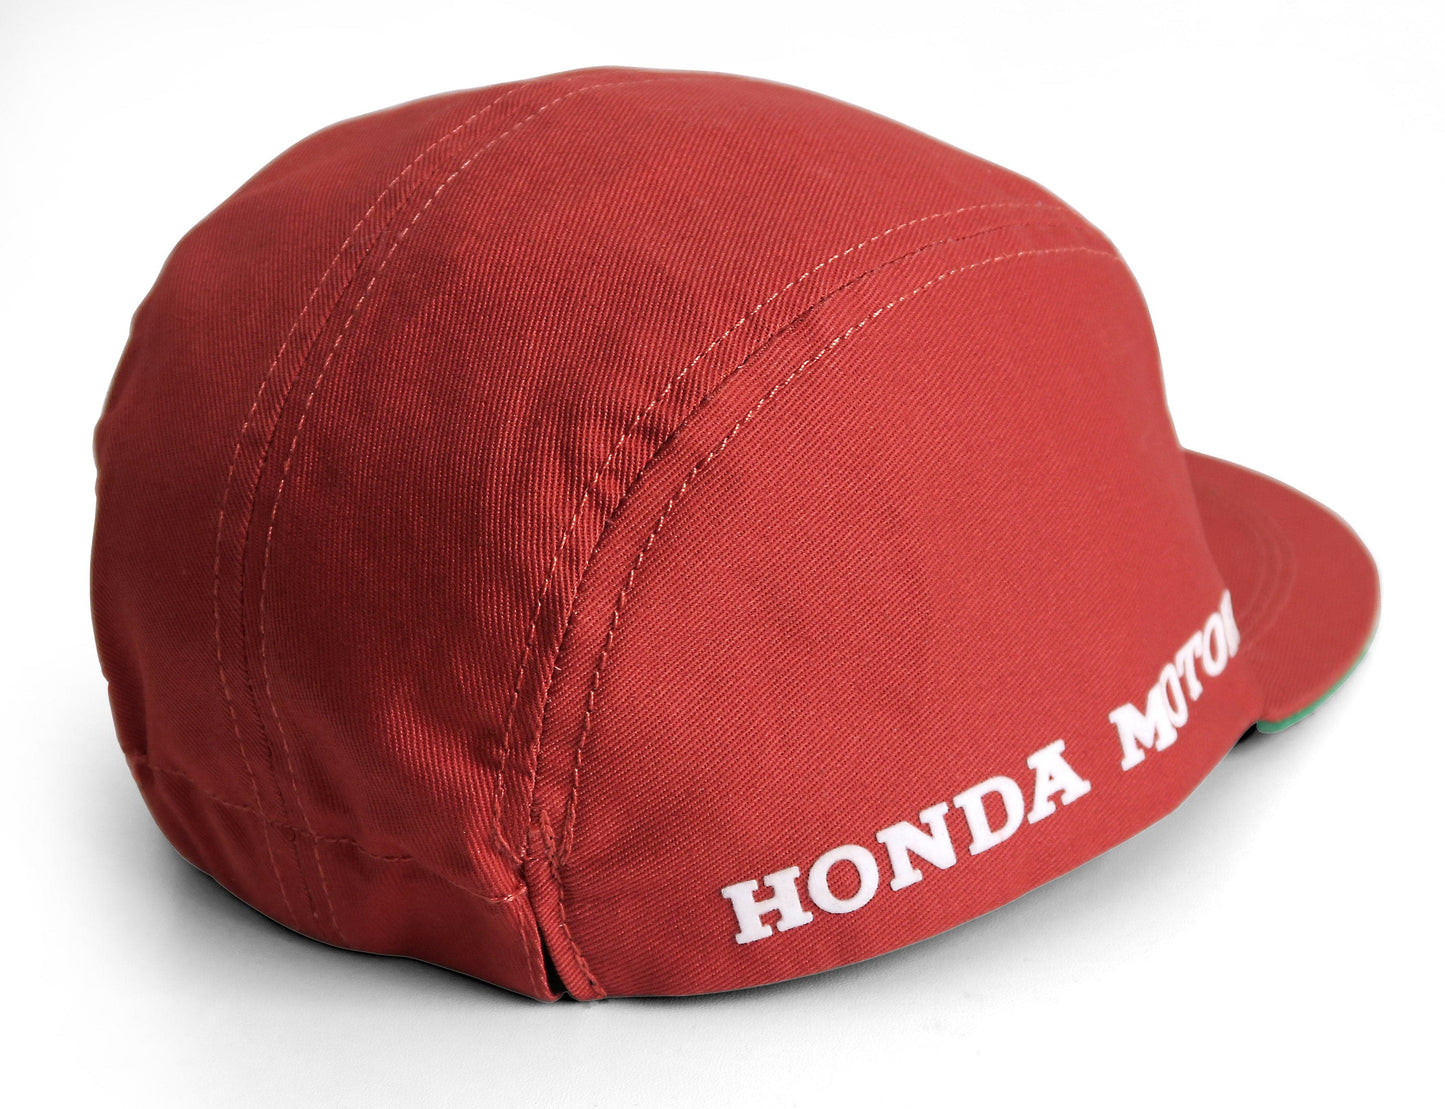 Honda Racing Replica Mechanics Hat (1964)